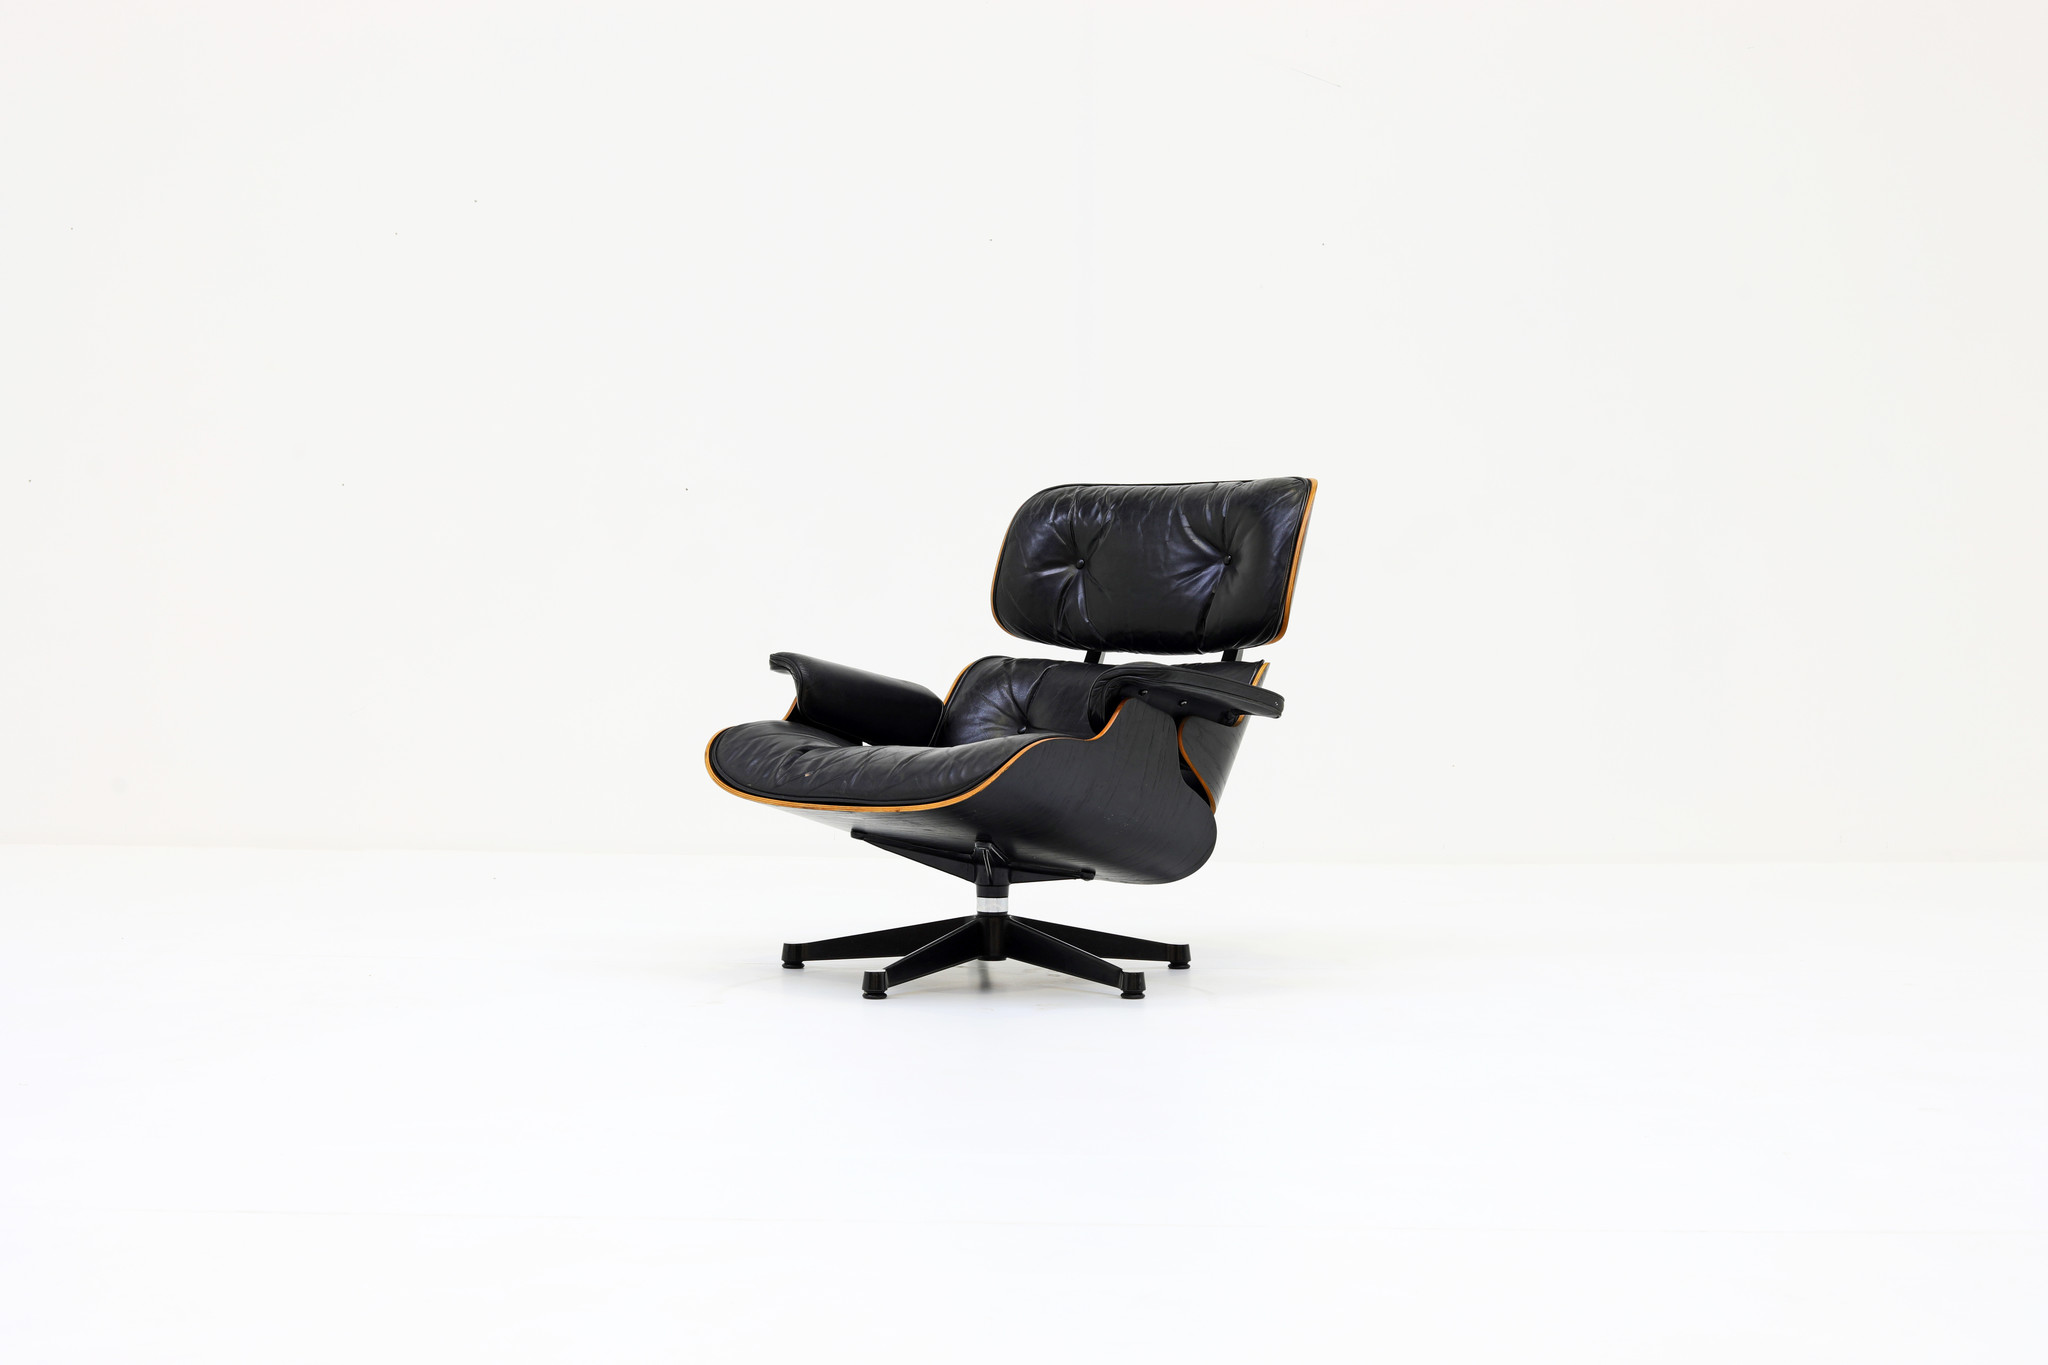 Eames Lounge chair "Herman Miller"